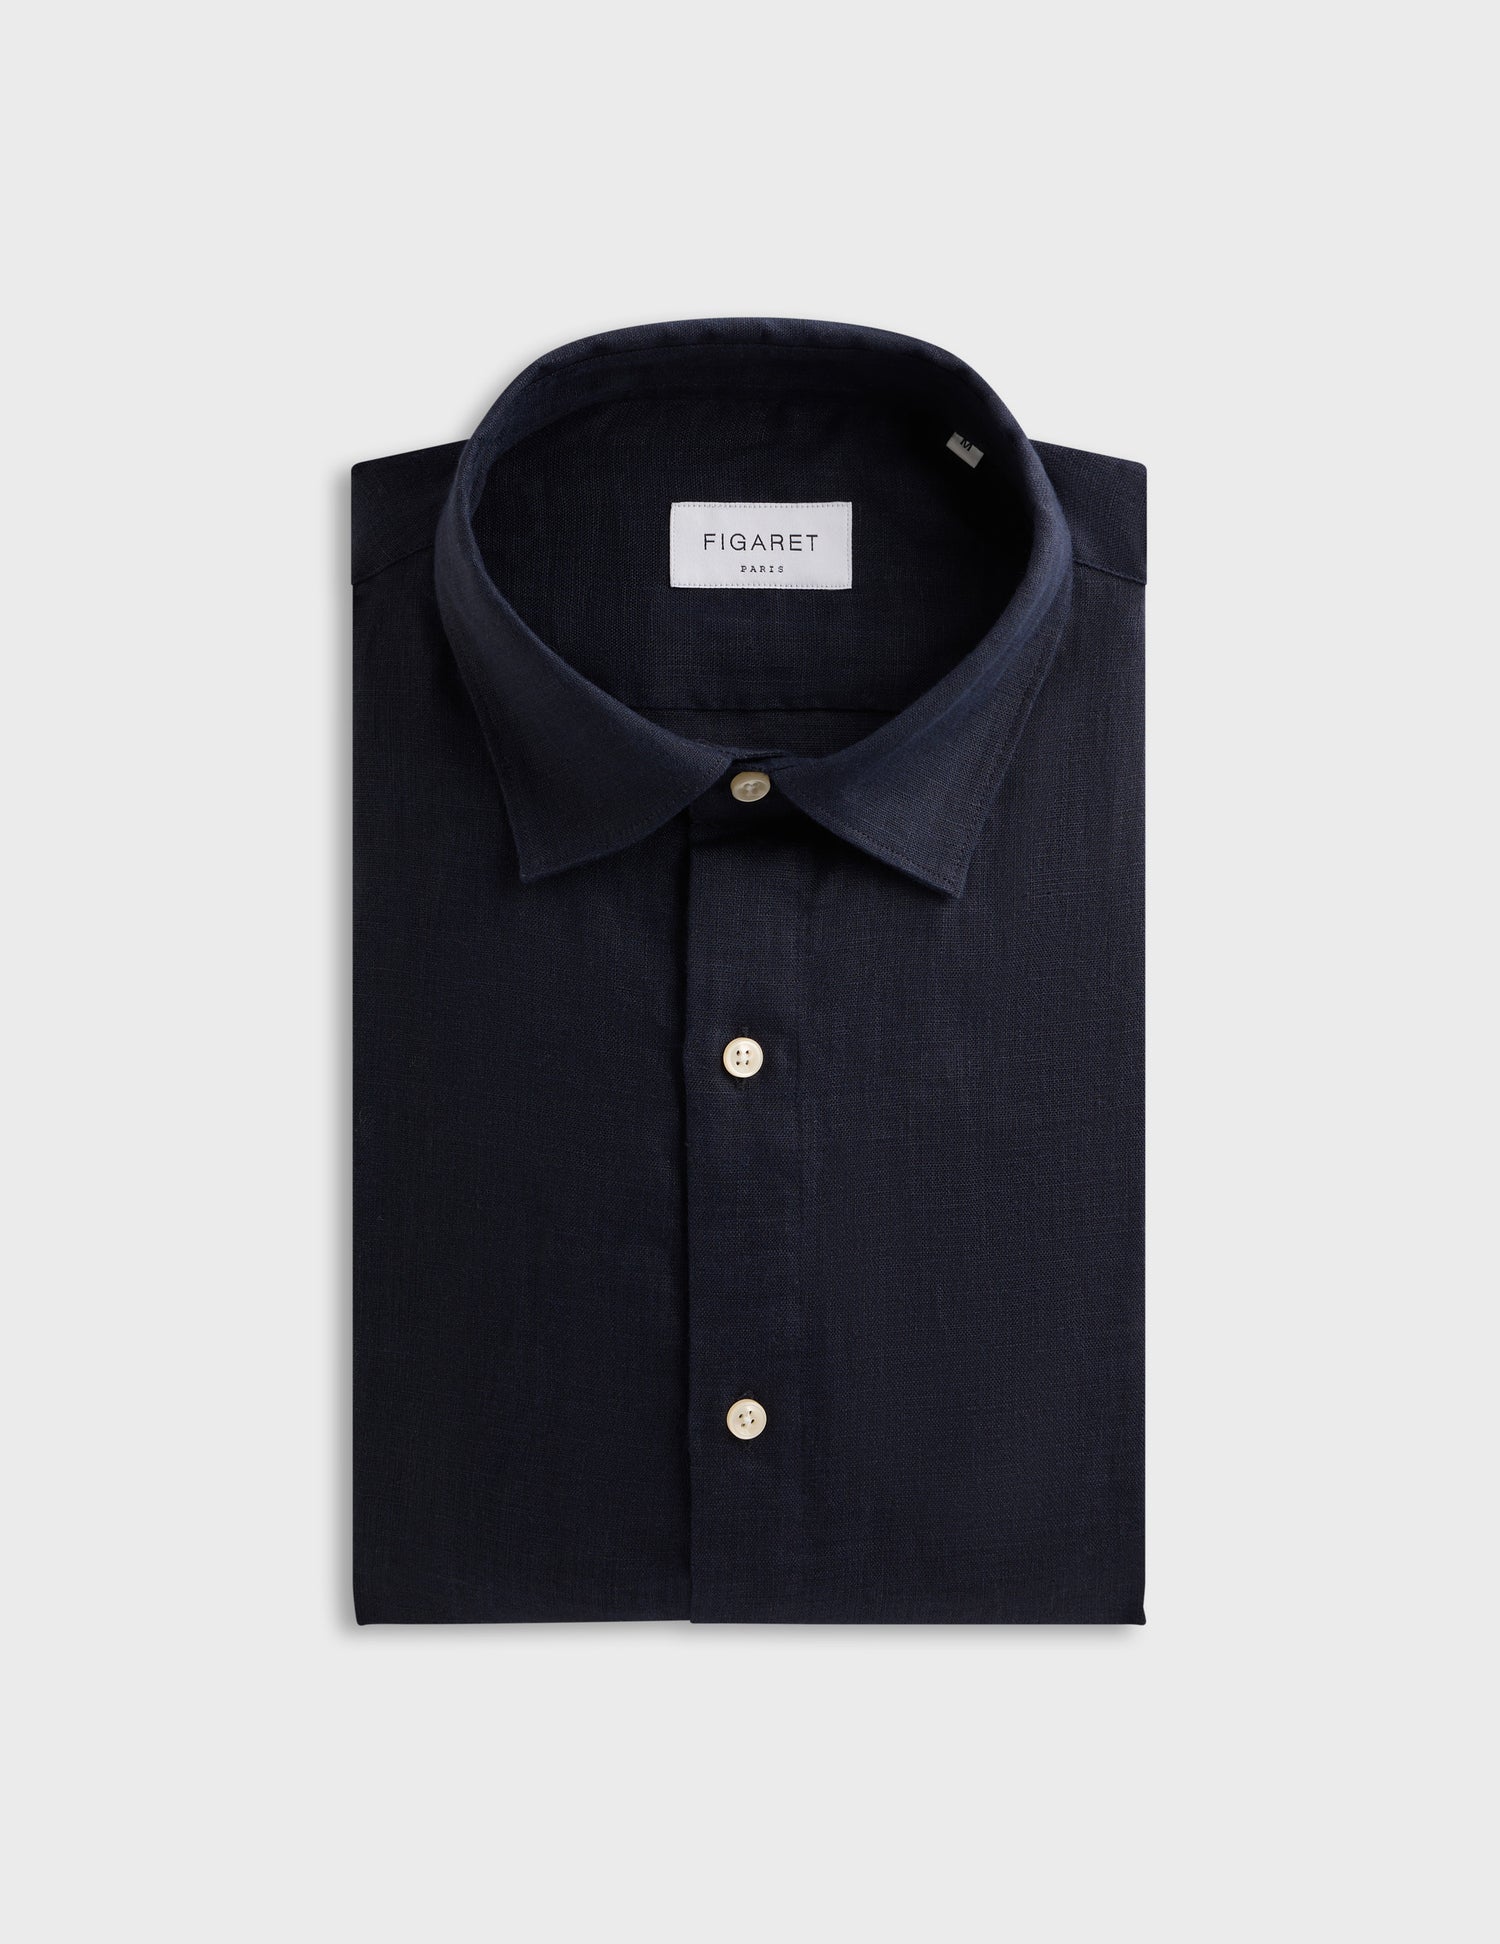 Auguste shirt in navy linen - Linen - French Collar#4